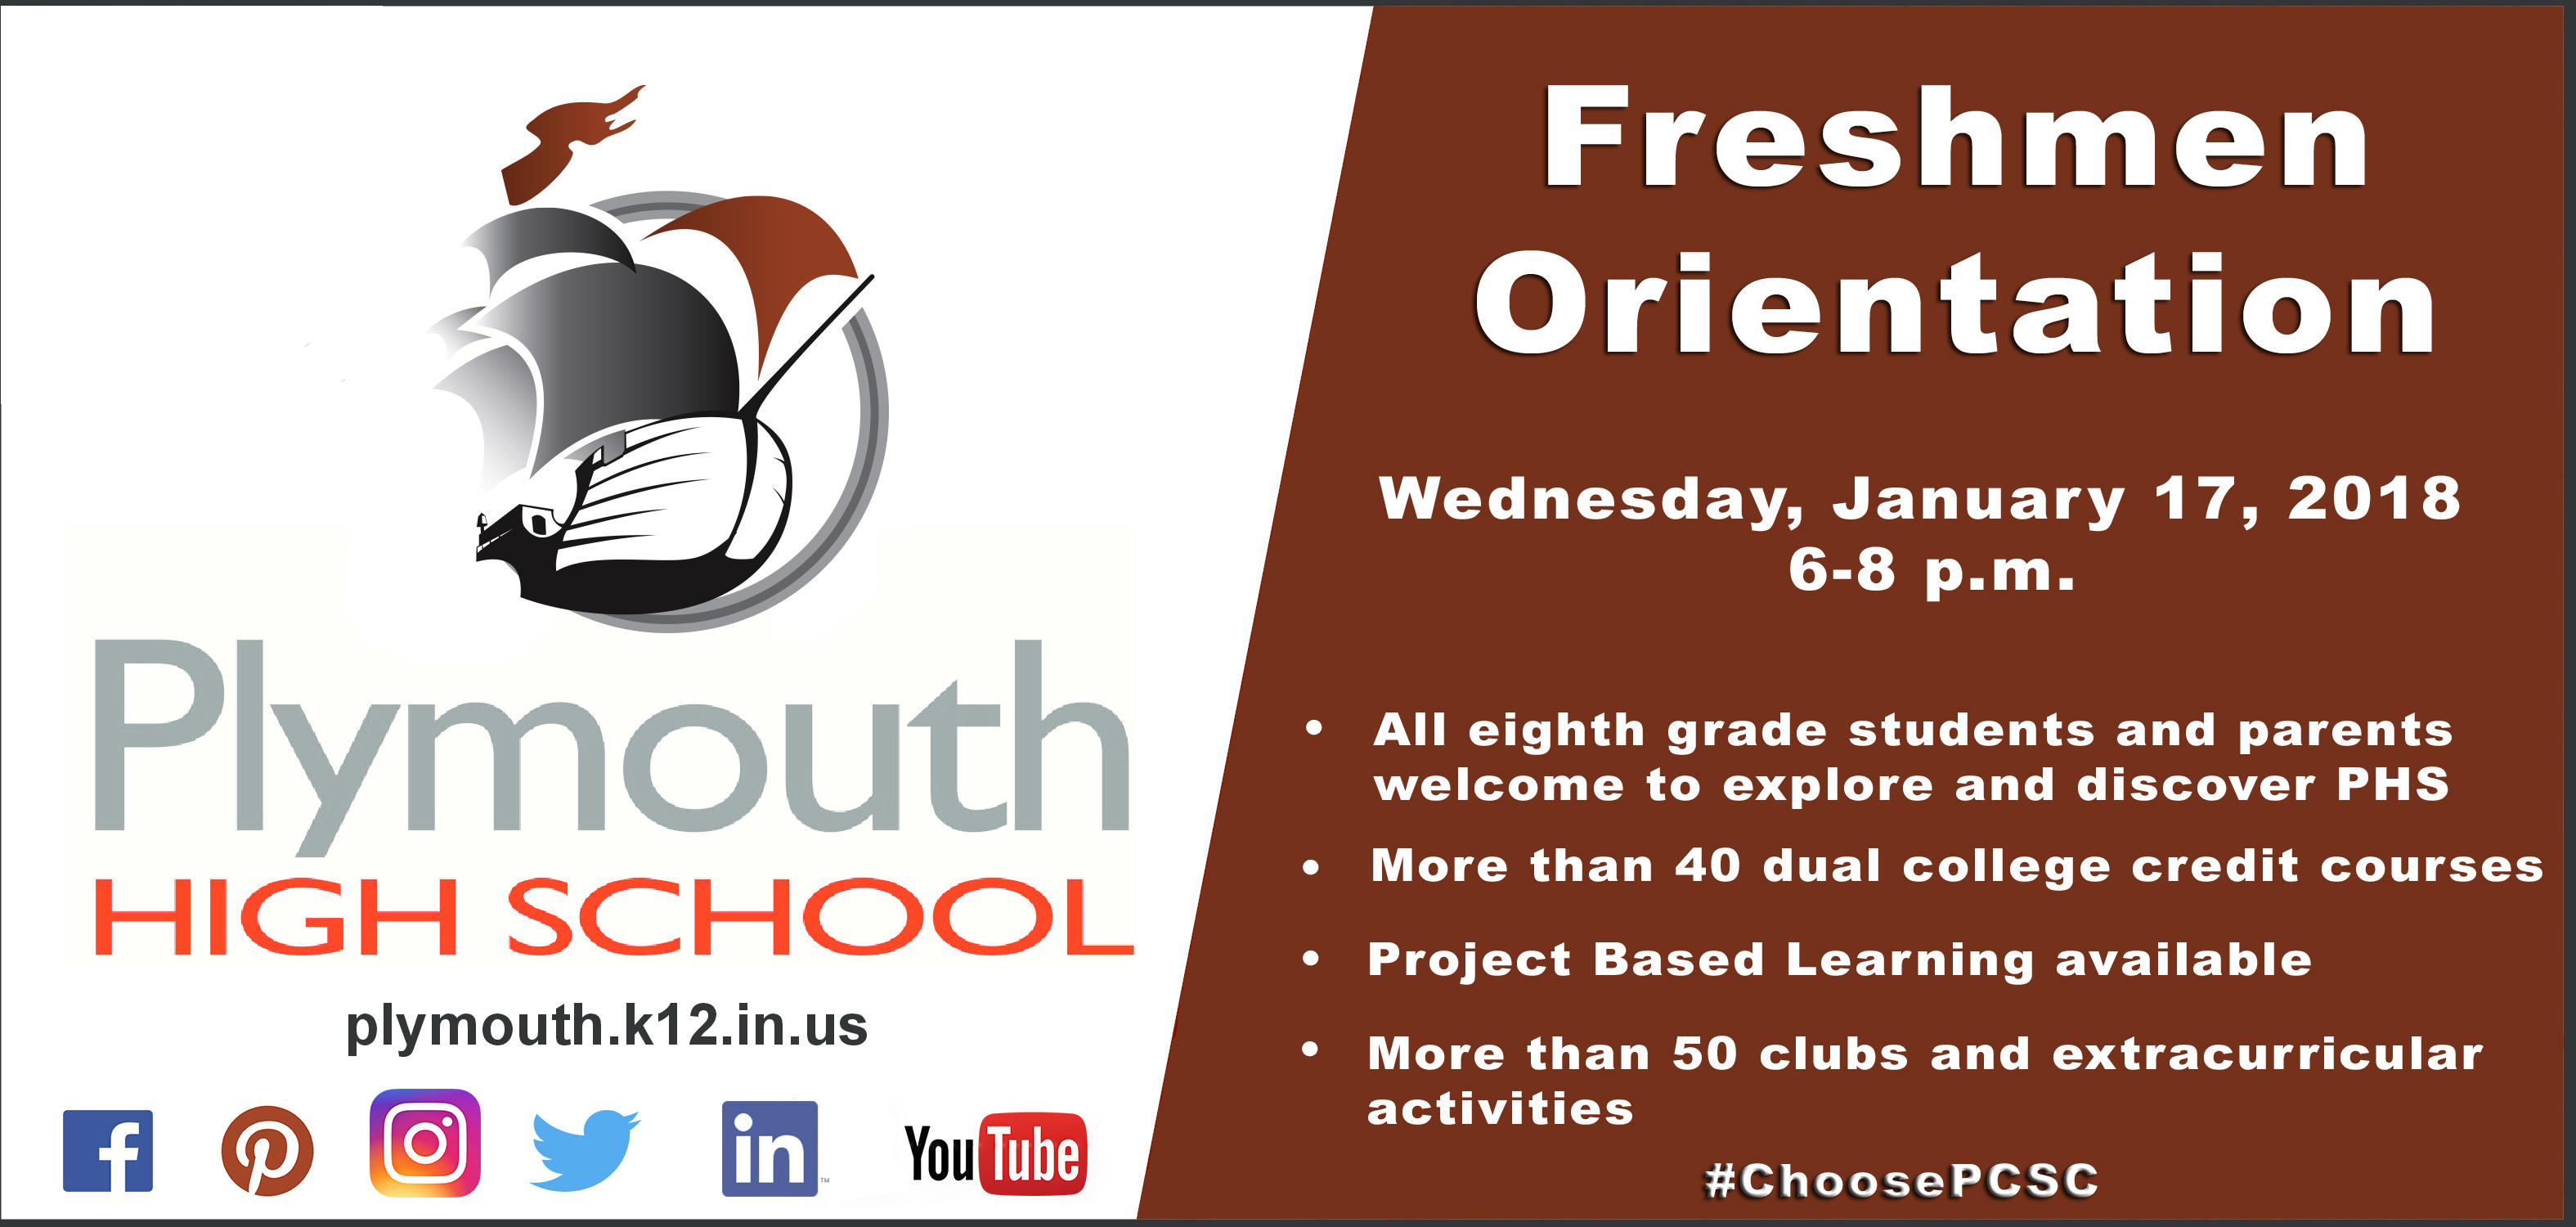 Freshmen Orientation Wednesday, January 17, 2018 6-8 p.m.